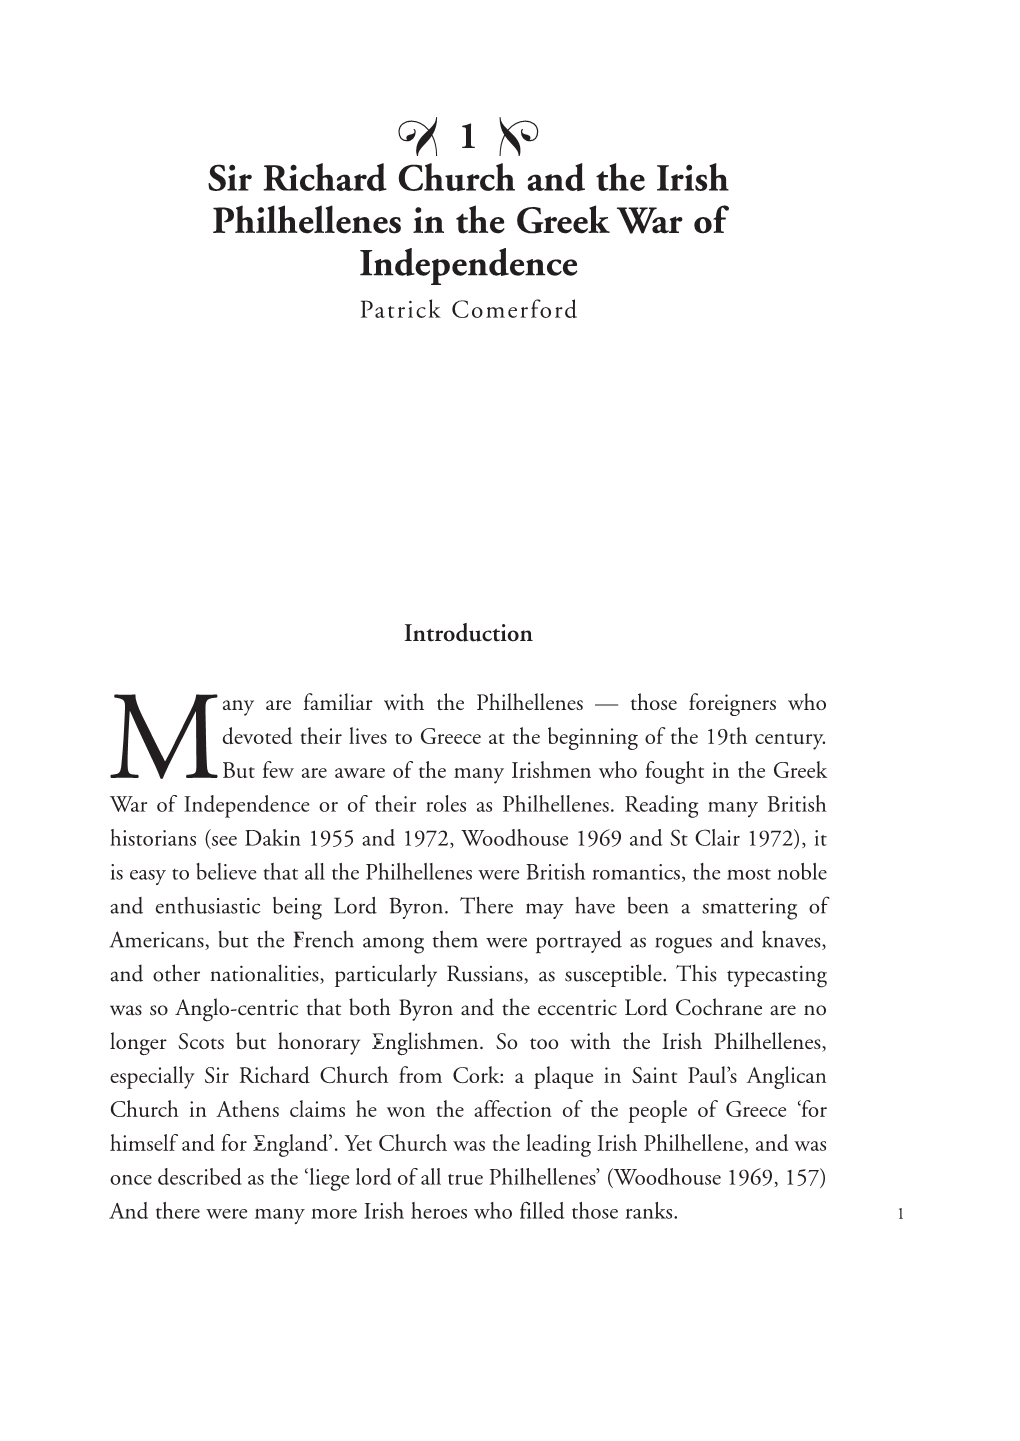 1 Sir Richard Church and the Irish Philhellenes in the Greek War Of